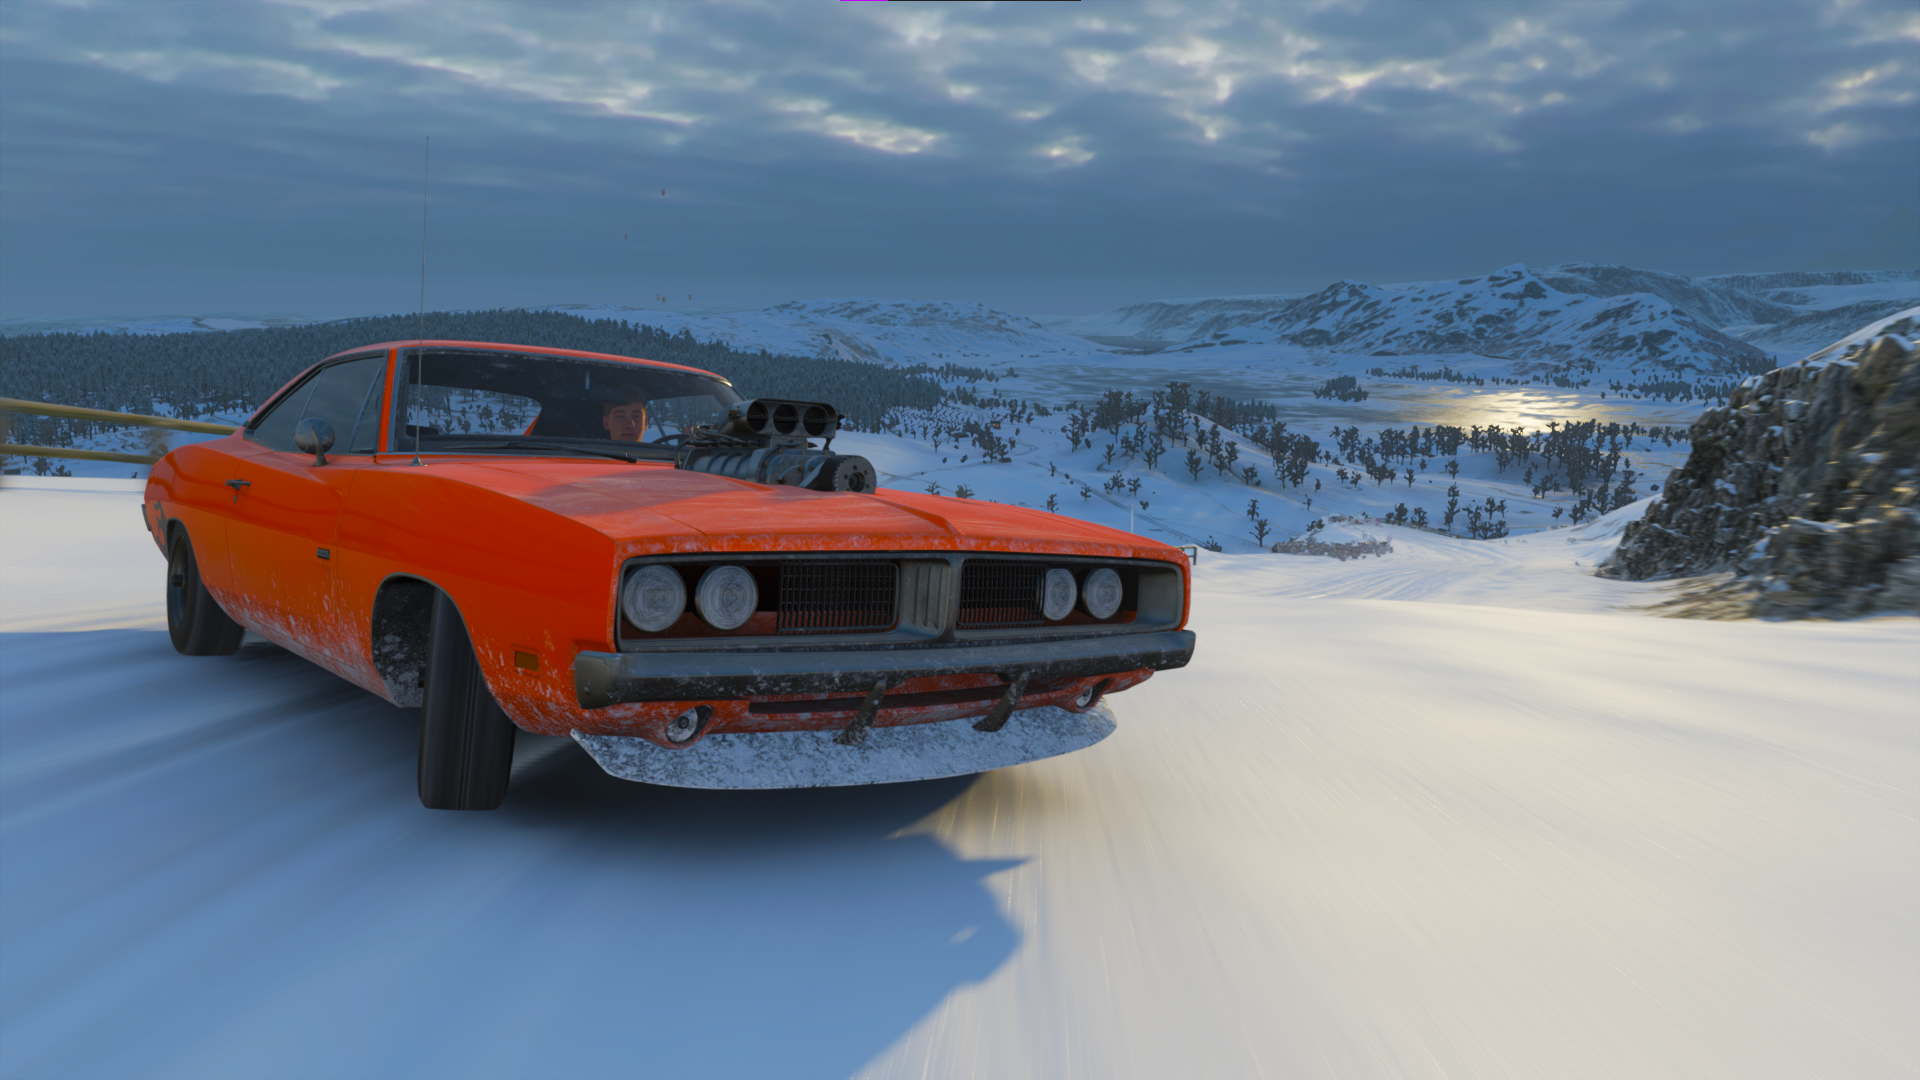 General 1920x1080 Forza Horizon Forza Horizon 4 Dodge Charger orange Hemi snow cold car video games